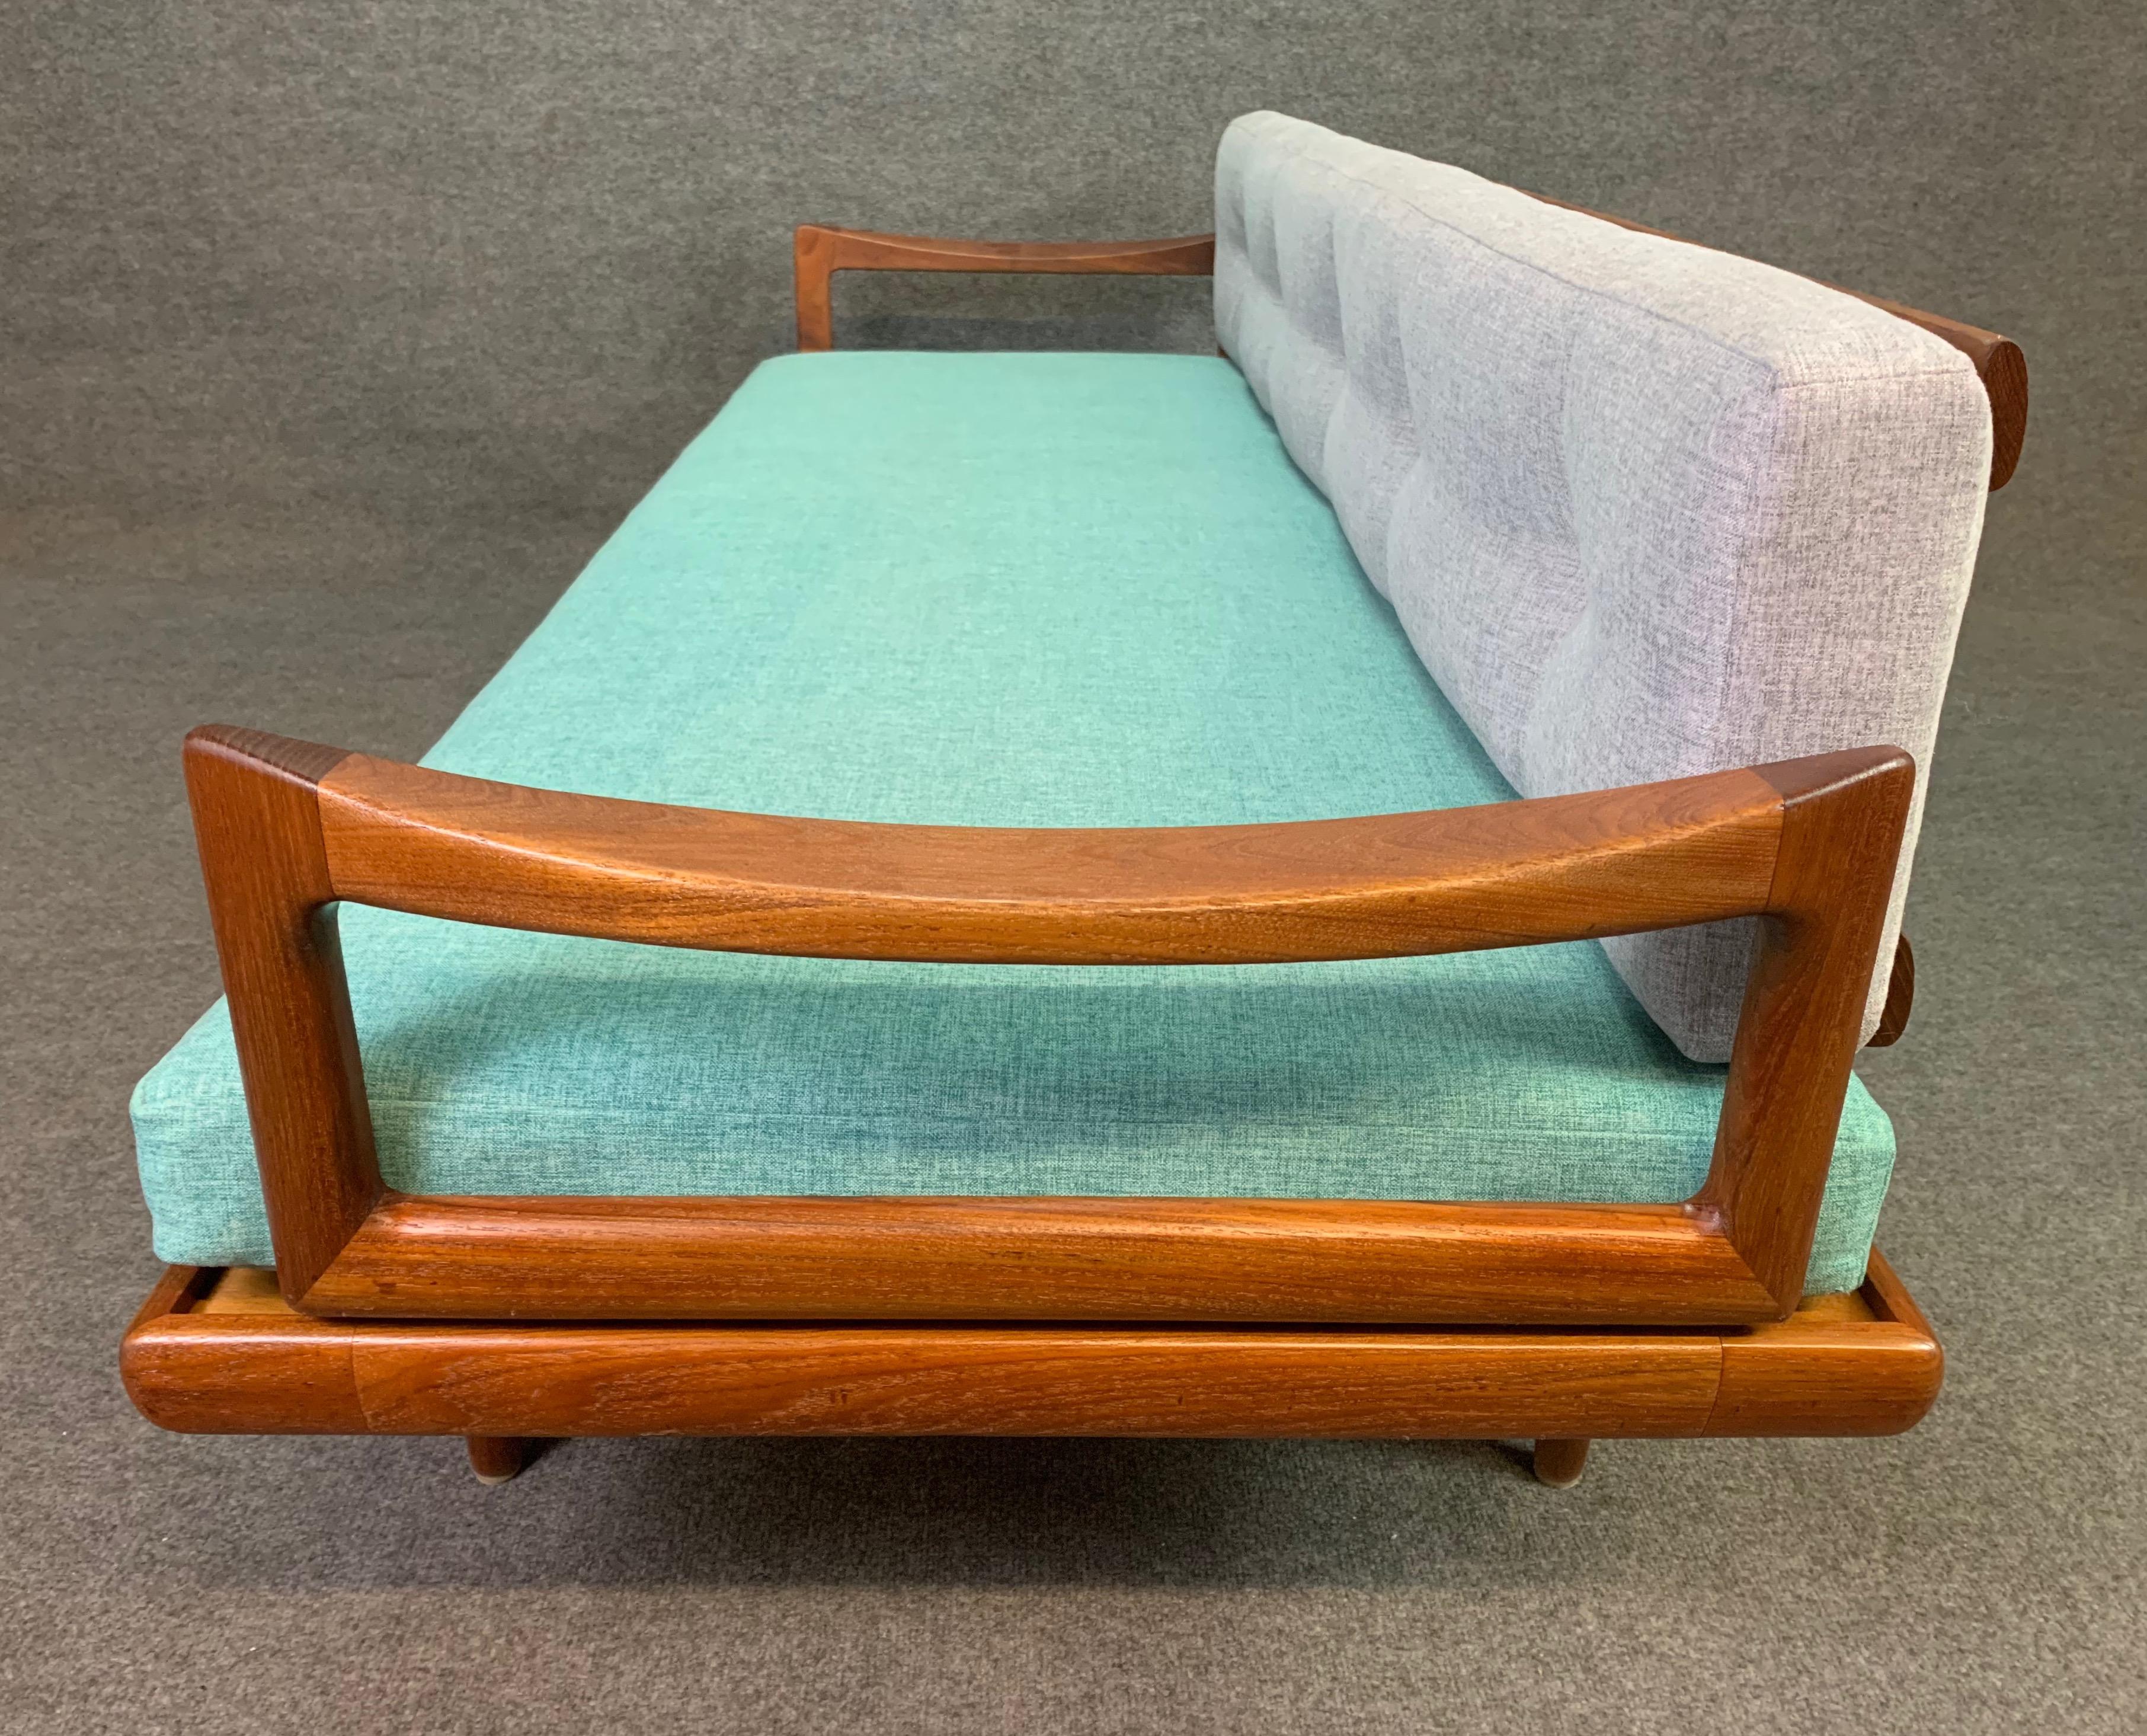 Vintage Scandinavian Mid-Century Modern Teak Sofa Daybed by Edvard Kindt-Larsen 1